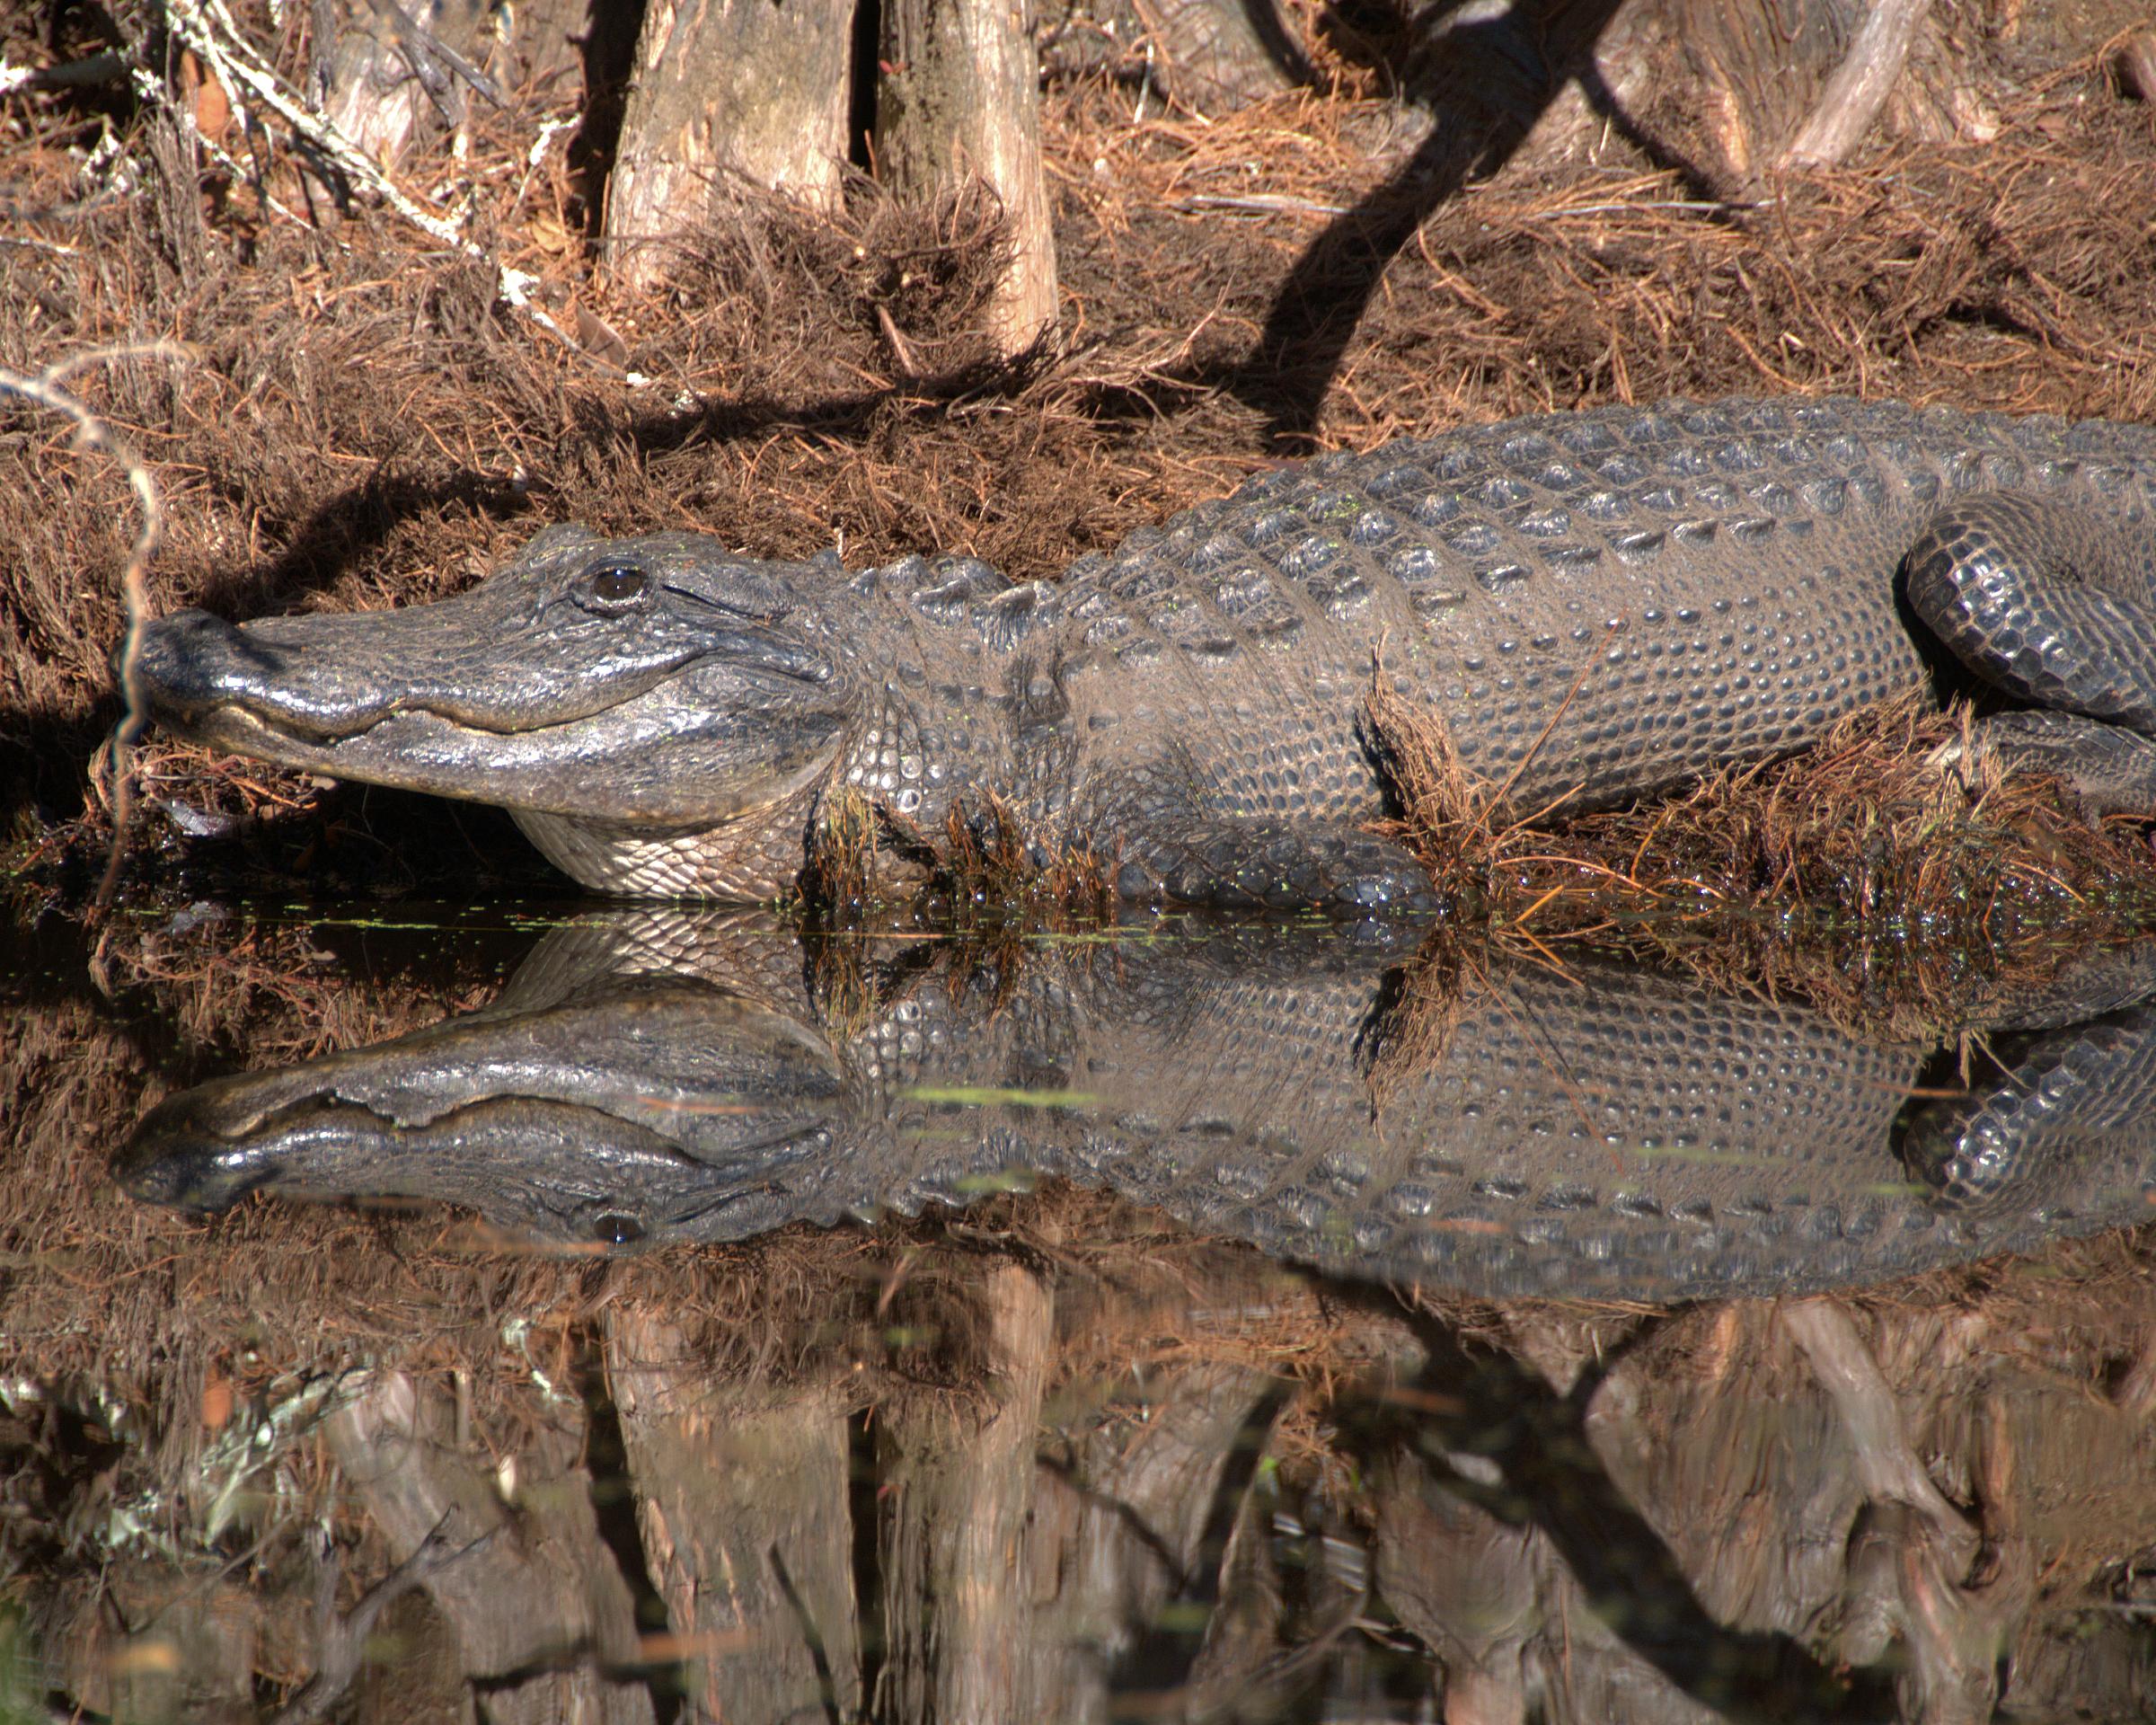 Gator getting in swamp (5178901967)